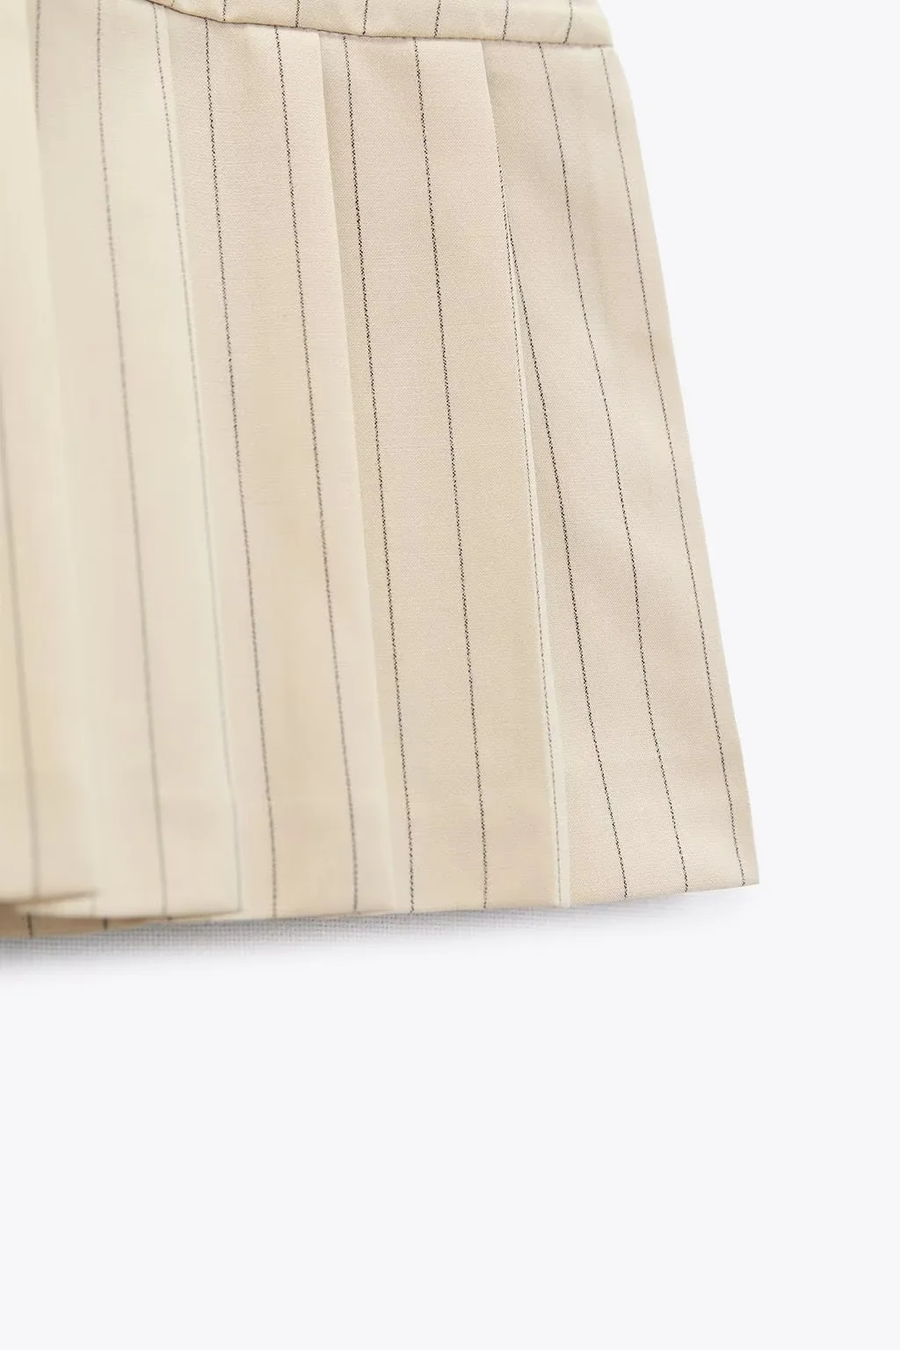 Fashion Light Brown Pinstripe Wide Pleated Hakama,Shorts